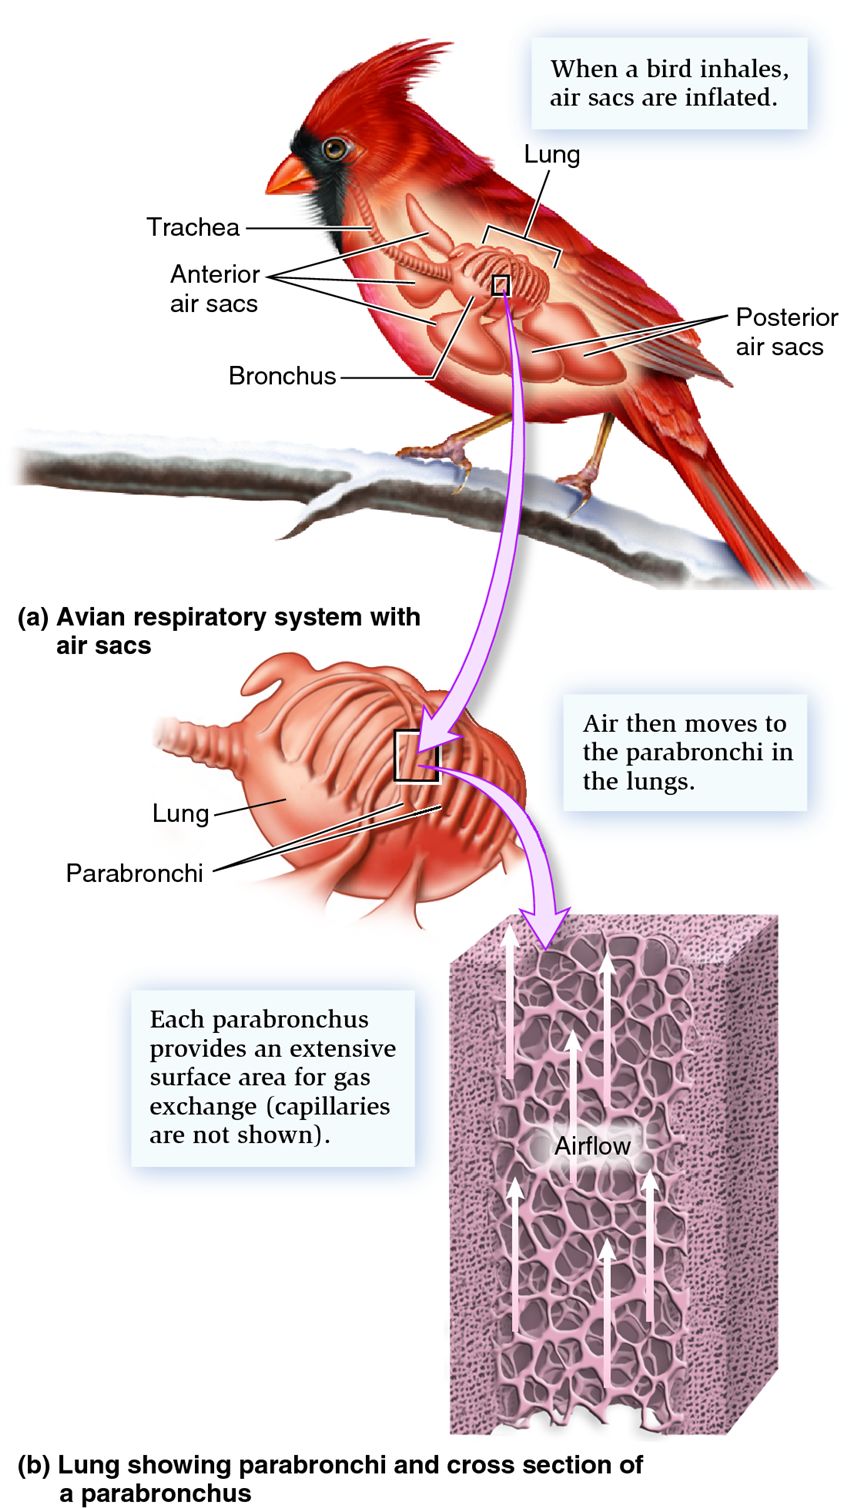 Respiratory system of a bird.